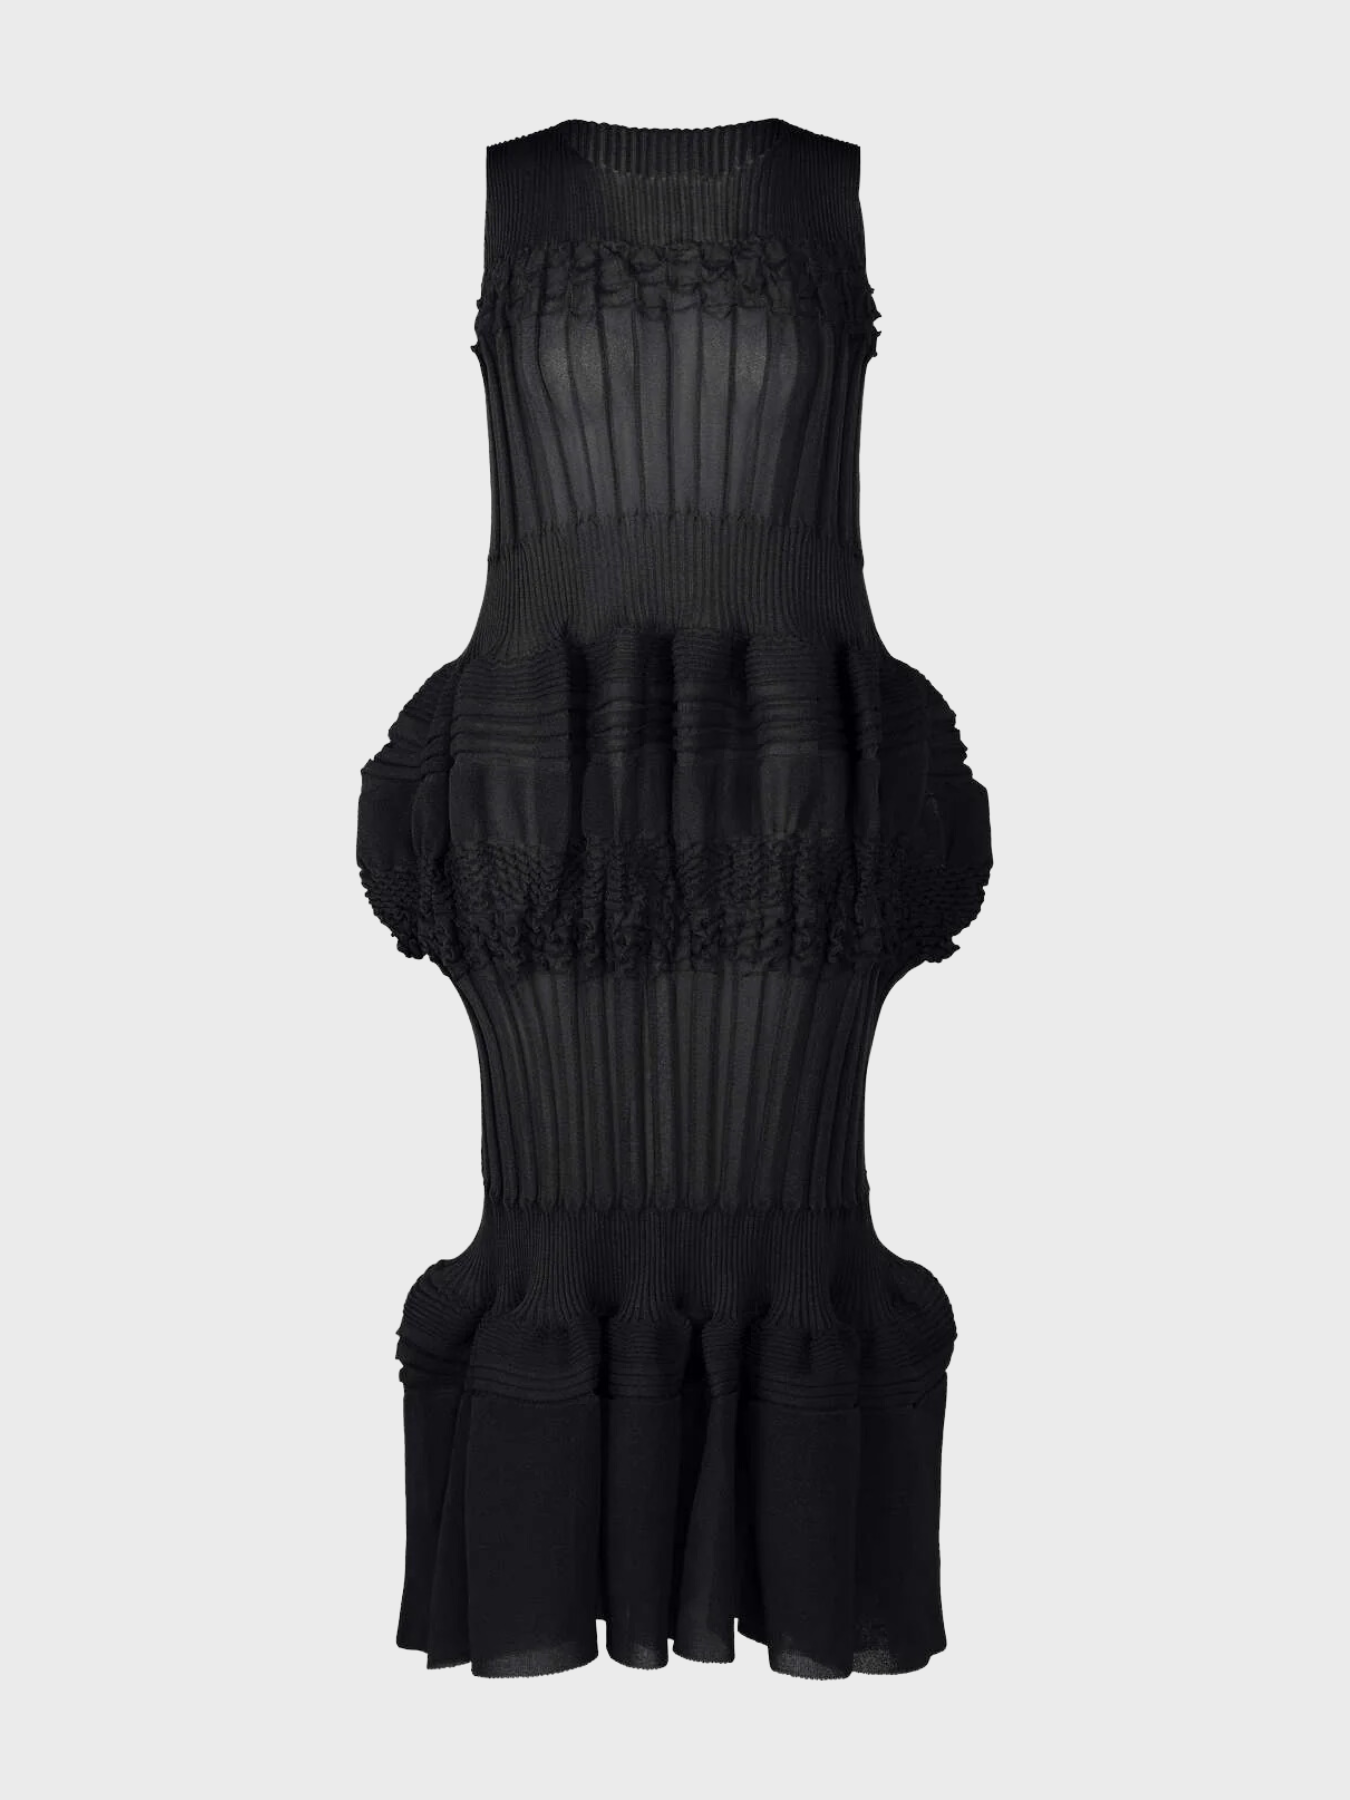 Assemblage Dress - Black